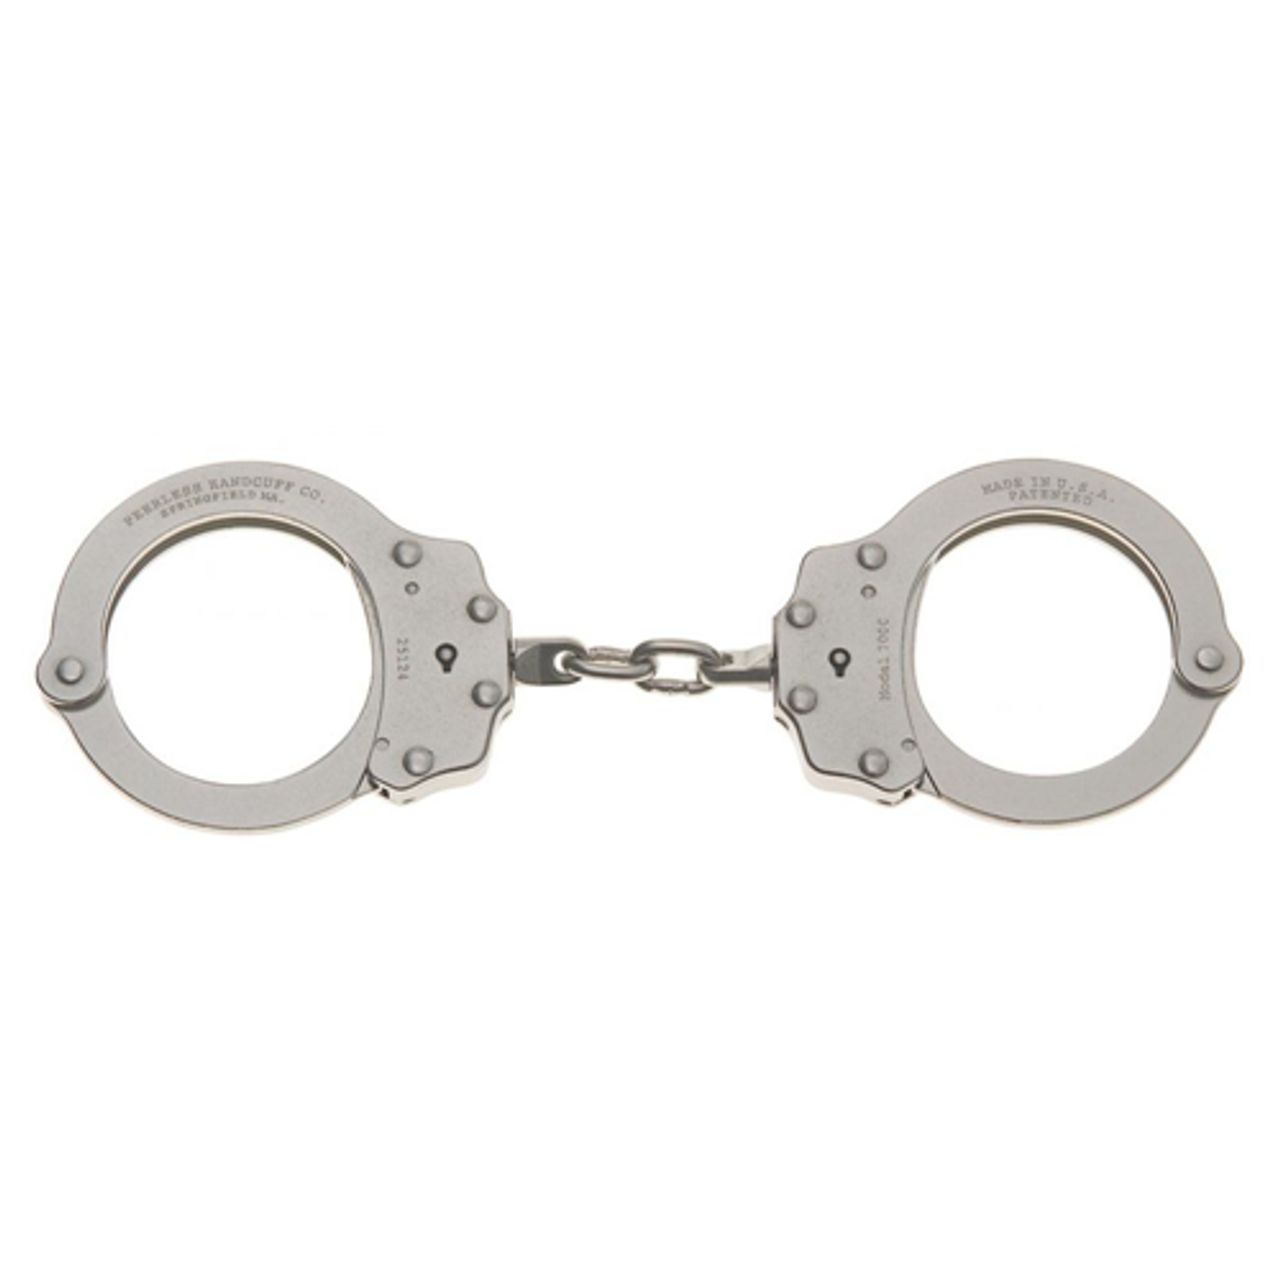 Model 700C Chain Link Handcuffs - Nickel Finish